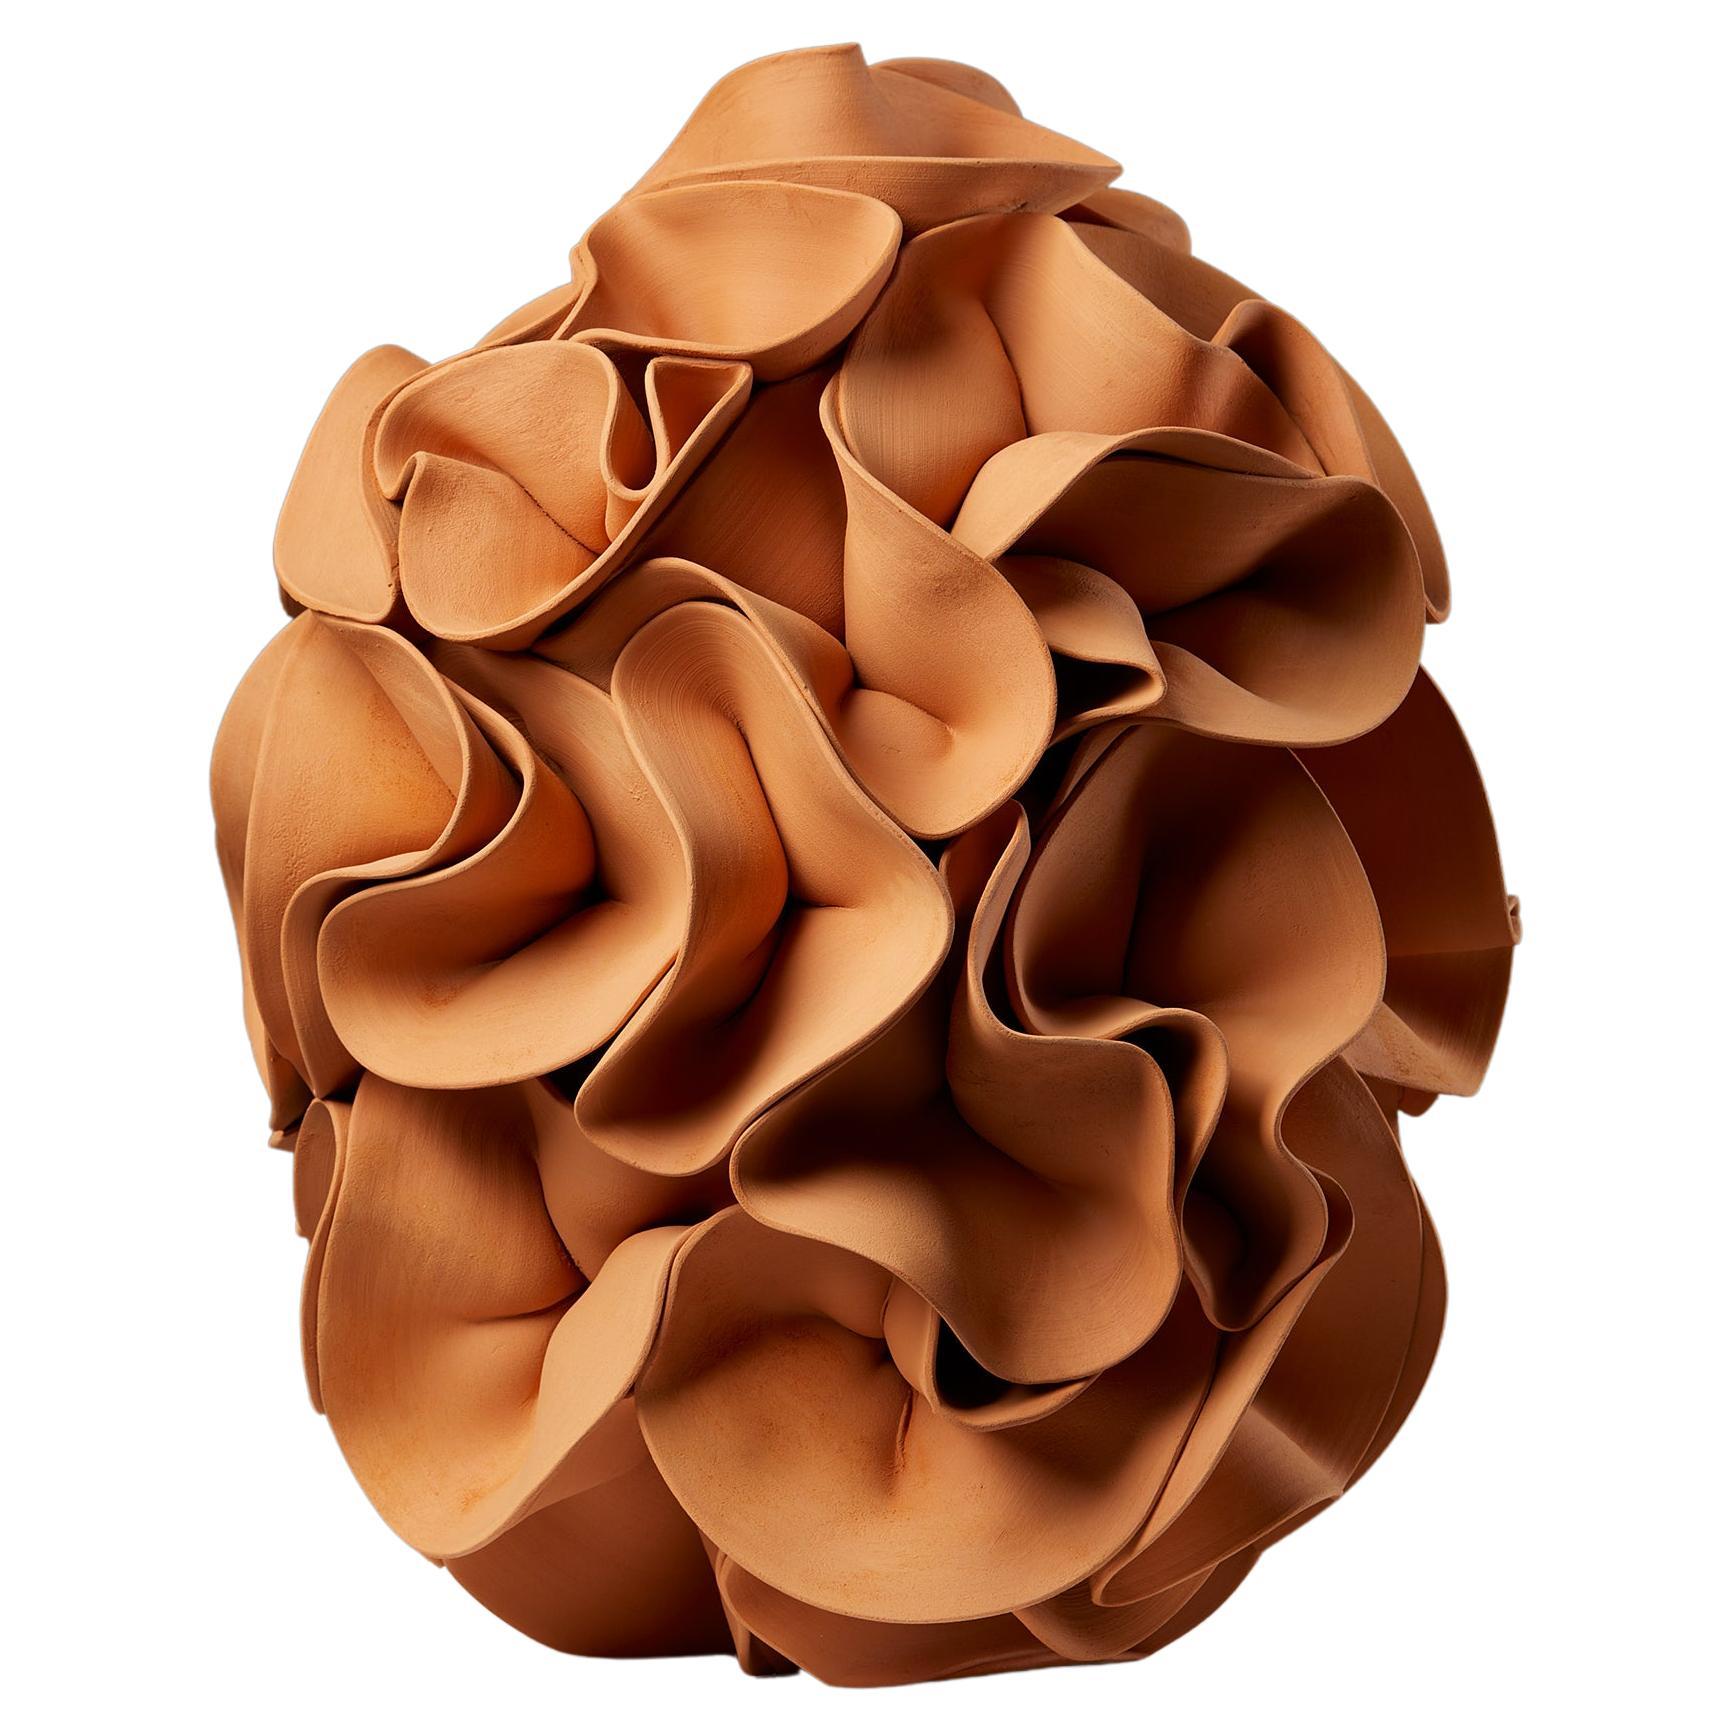 Ceramic Sculpture ‘Hybrid’ by Alvina Jakobsson, Sweden, 2022